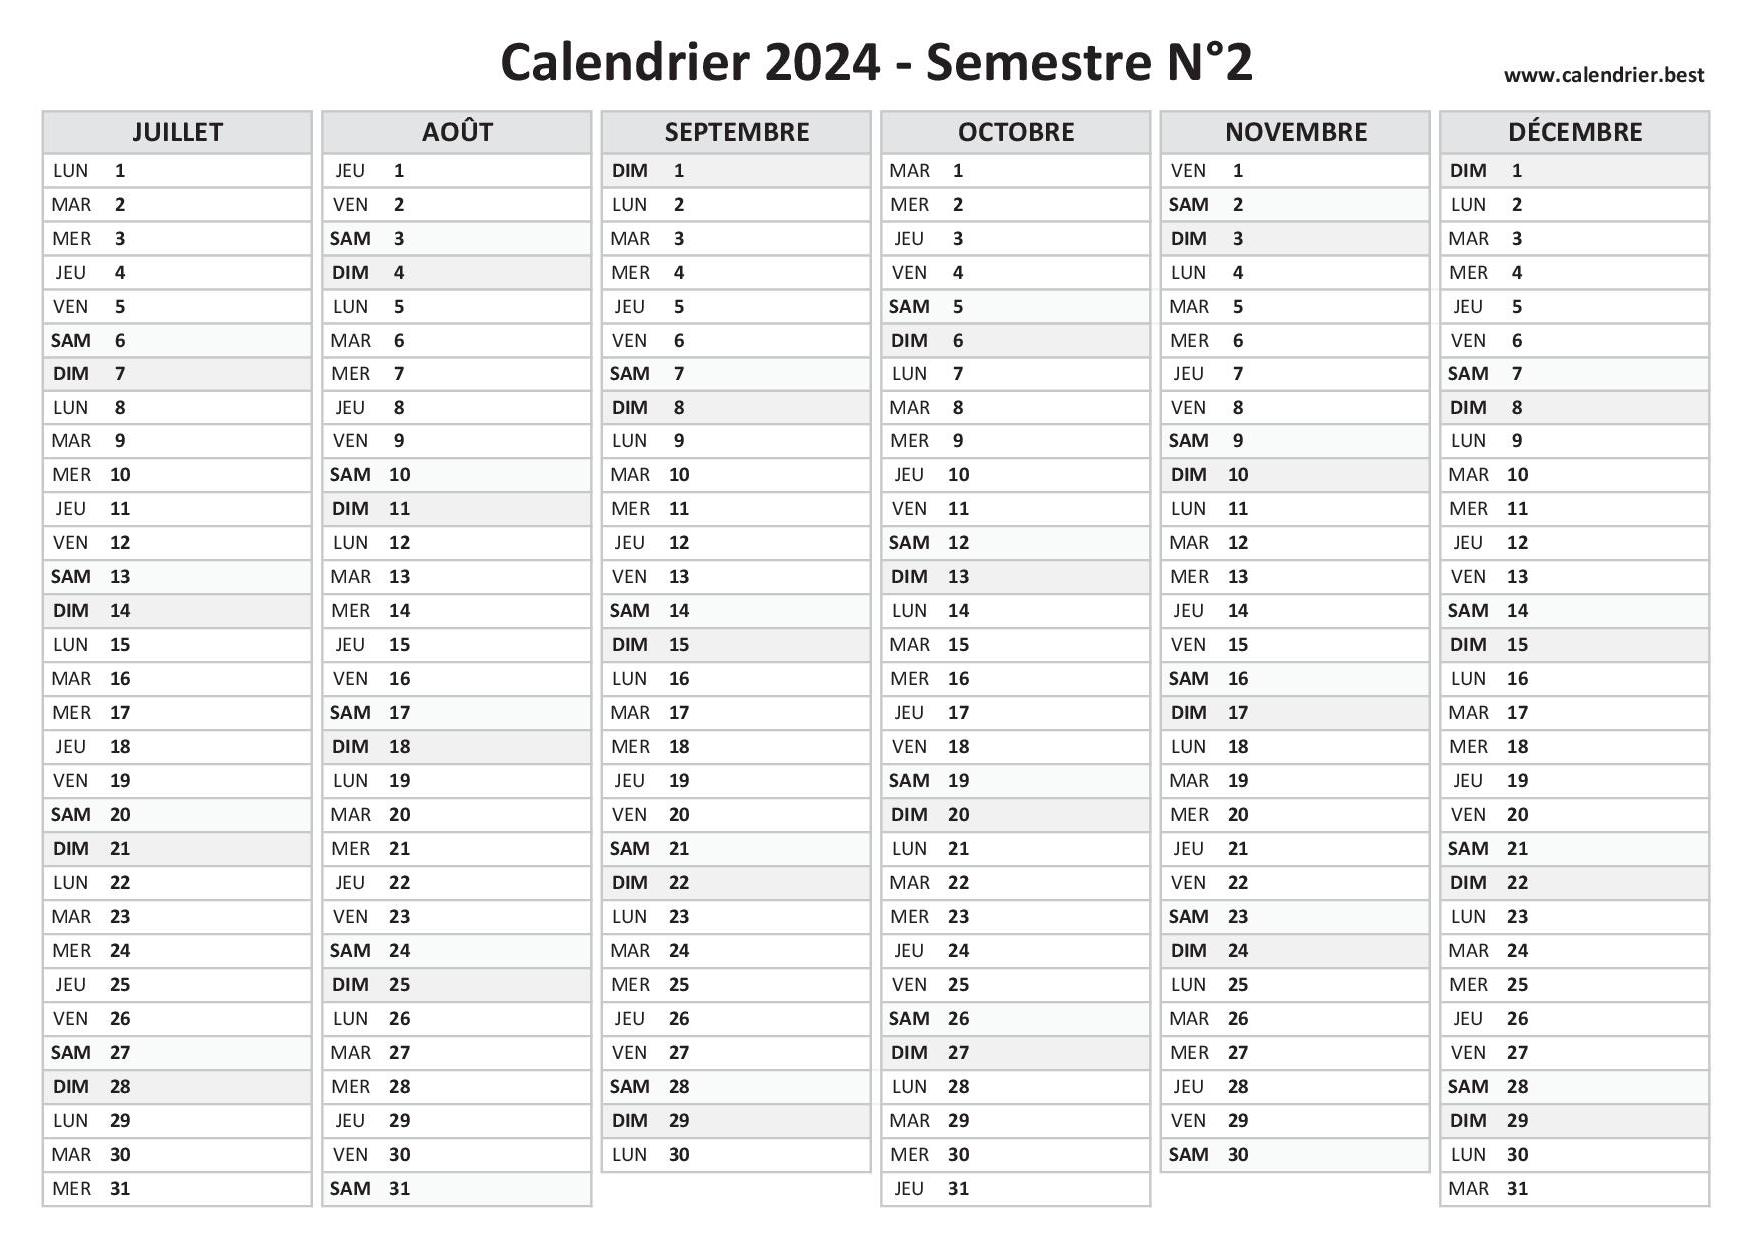 Calendrier 2024 à imprimer - Agenda 2024 gratuit - Planitica